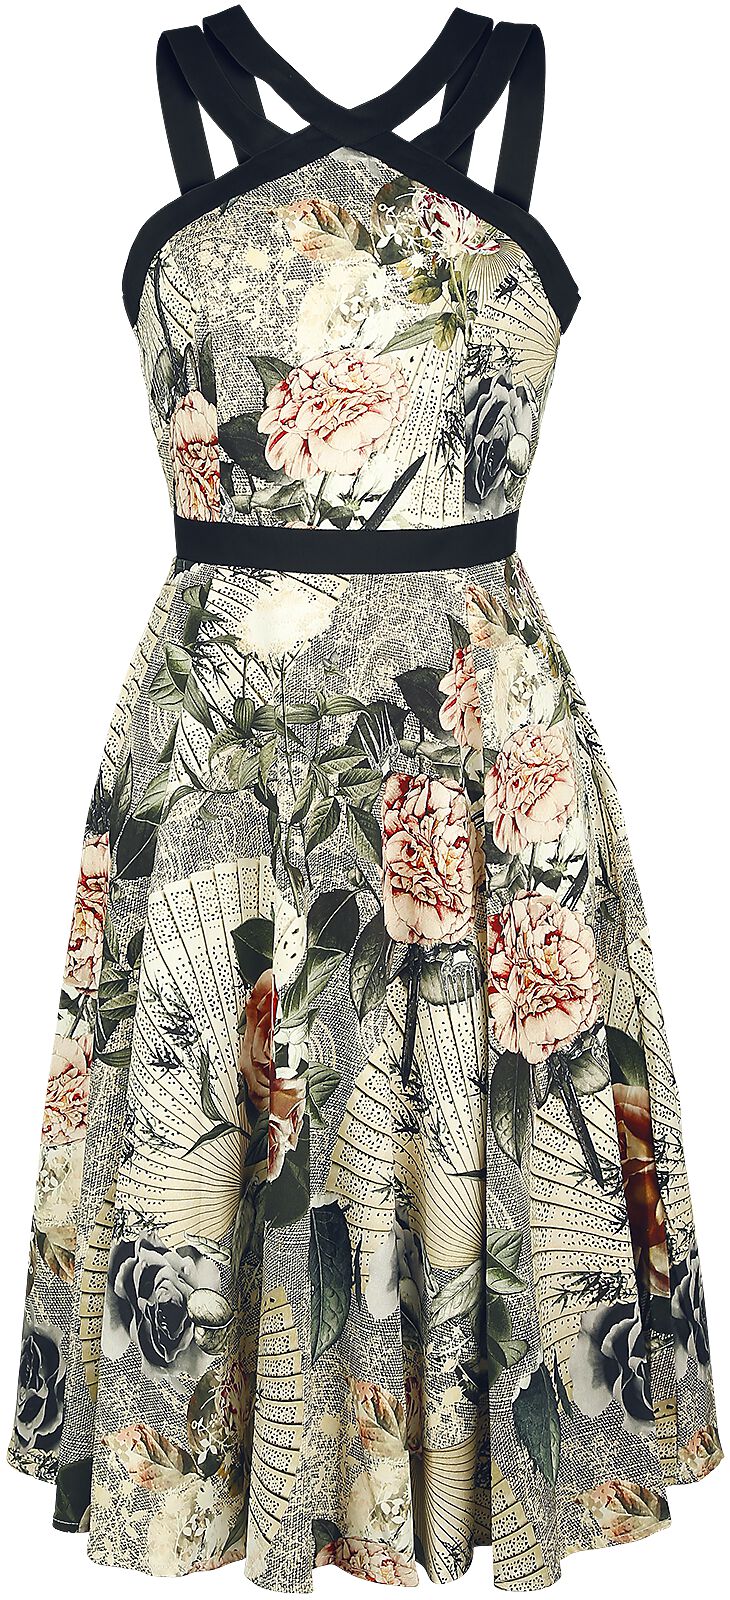 H&R London - Rockabilly Kleid knielang - Ancient Roses - S bis 4XL - für Damen - Größe 4XL - multicolor